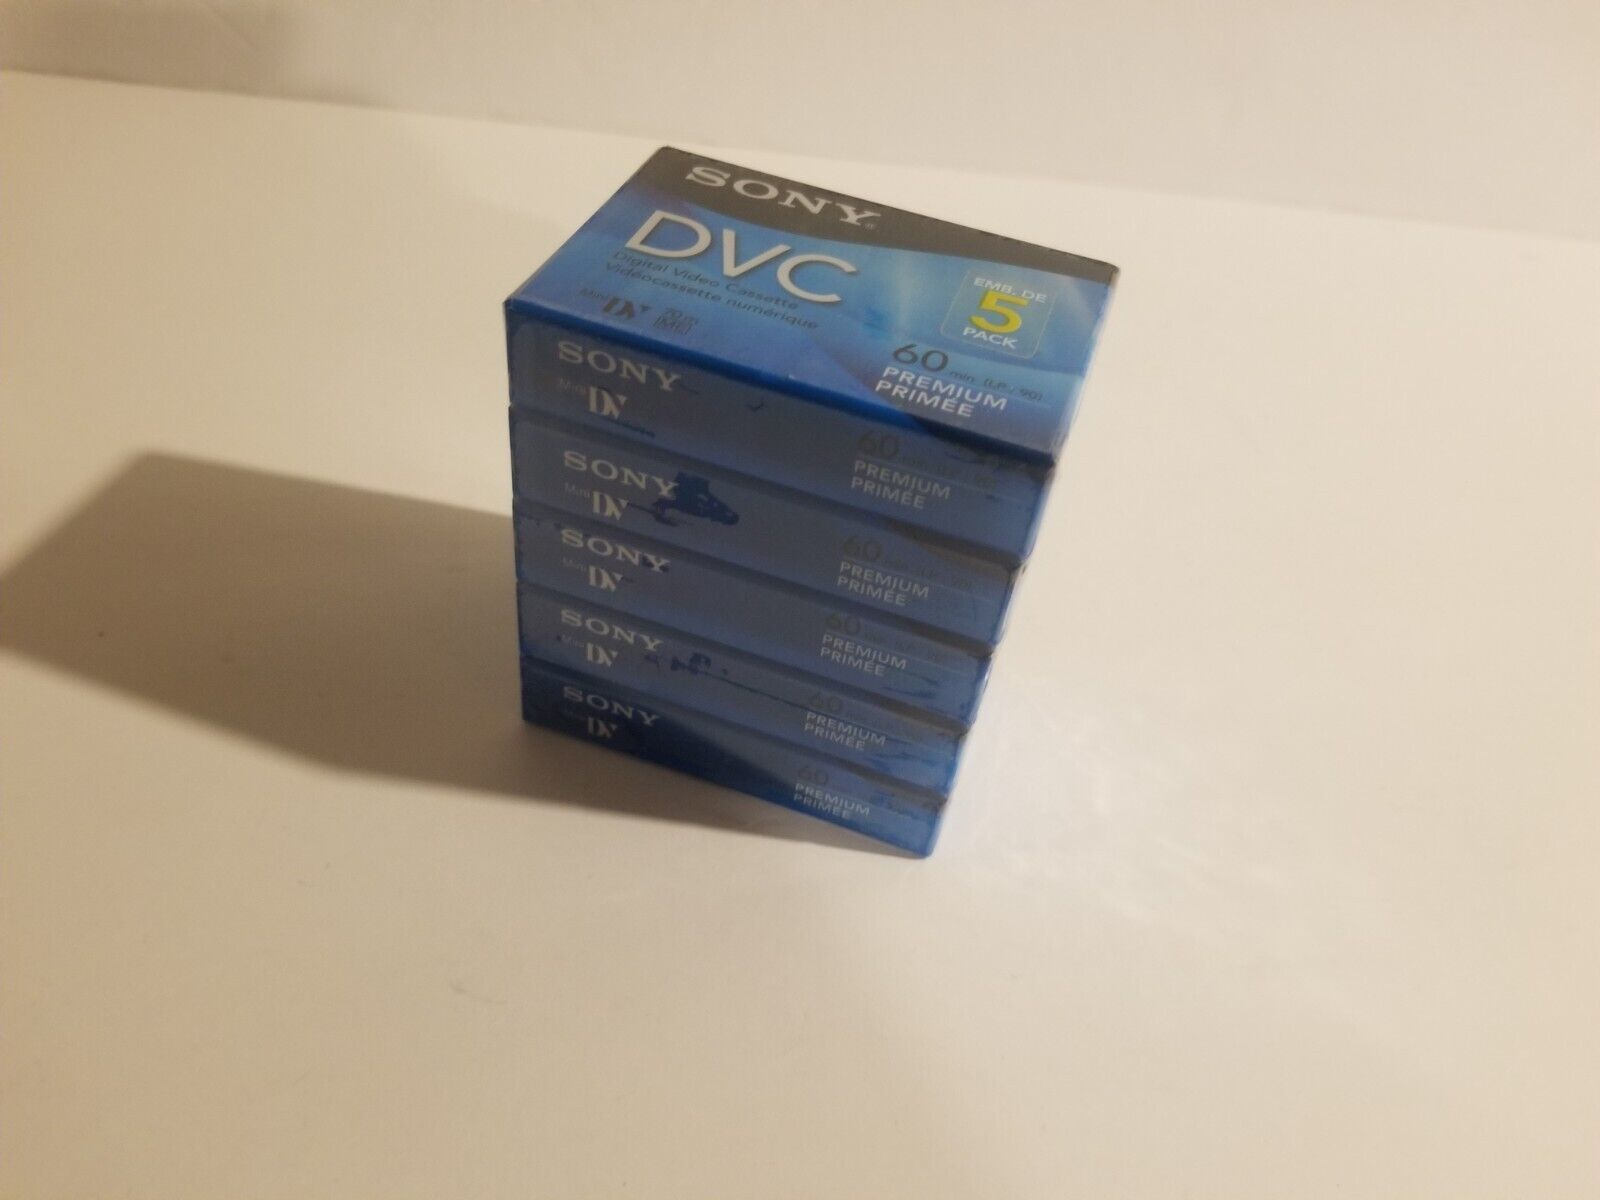 Primary image for 5 New Sony Premium DVC 60 LP: 90(DVM60PRR) Digital Video Cassettes